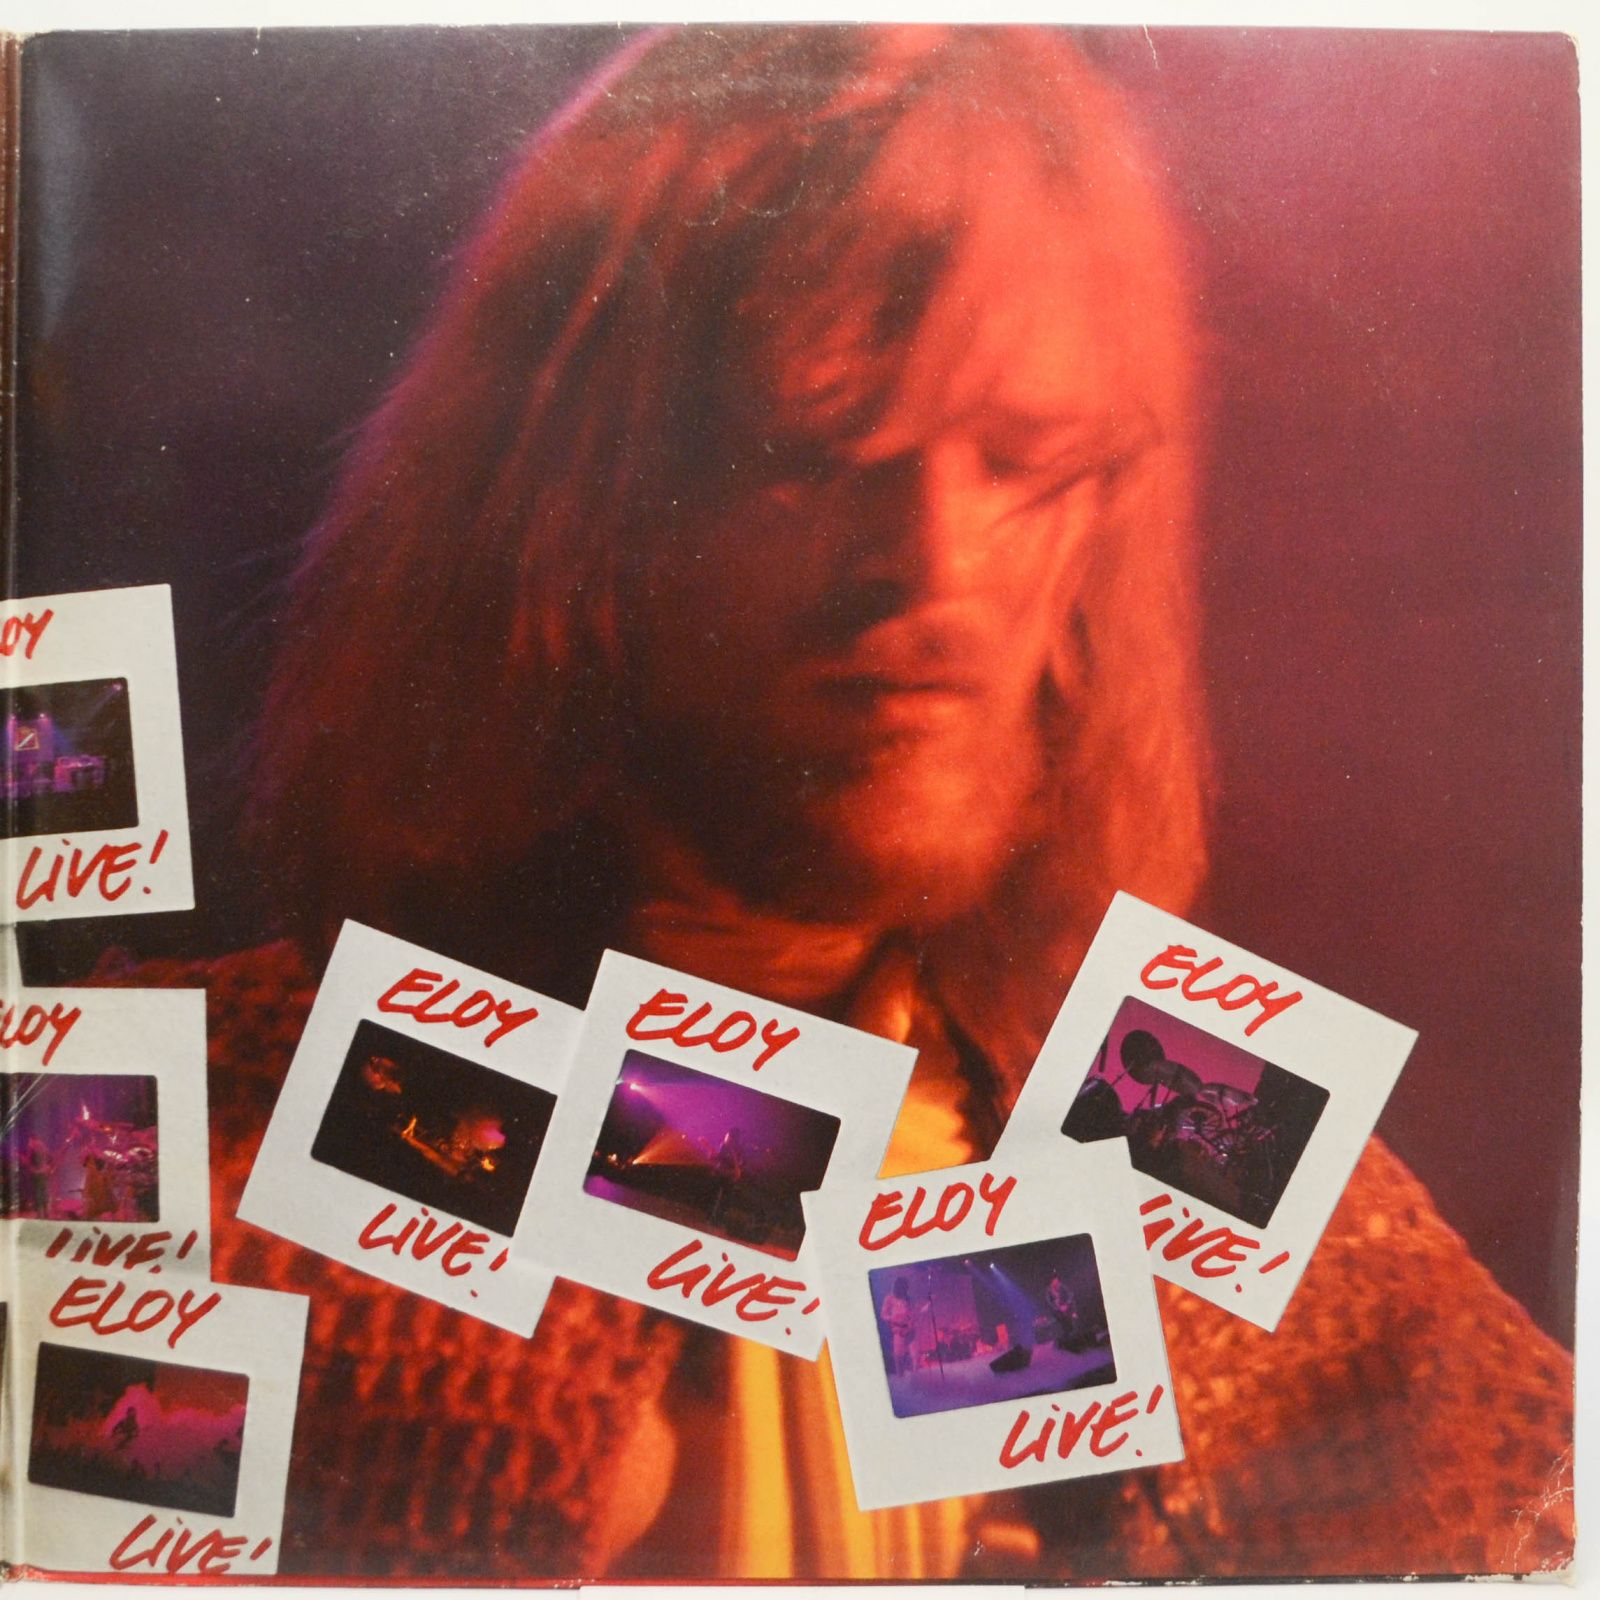 Eloy — Live (2LP), 1978